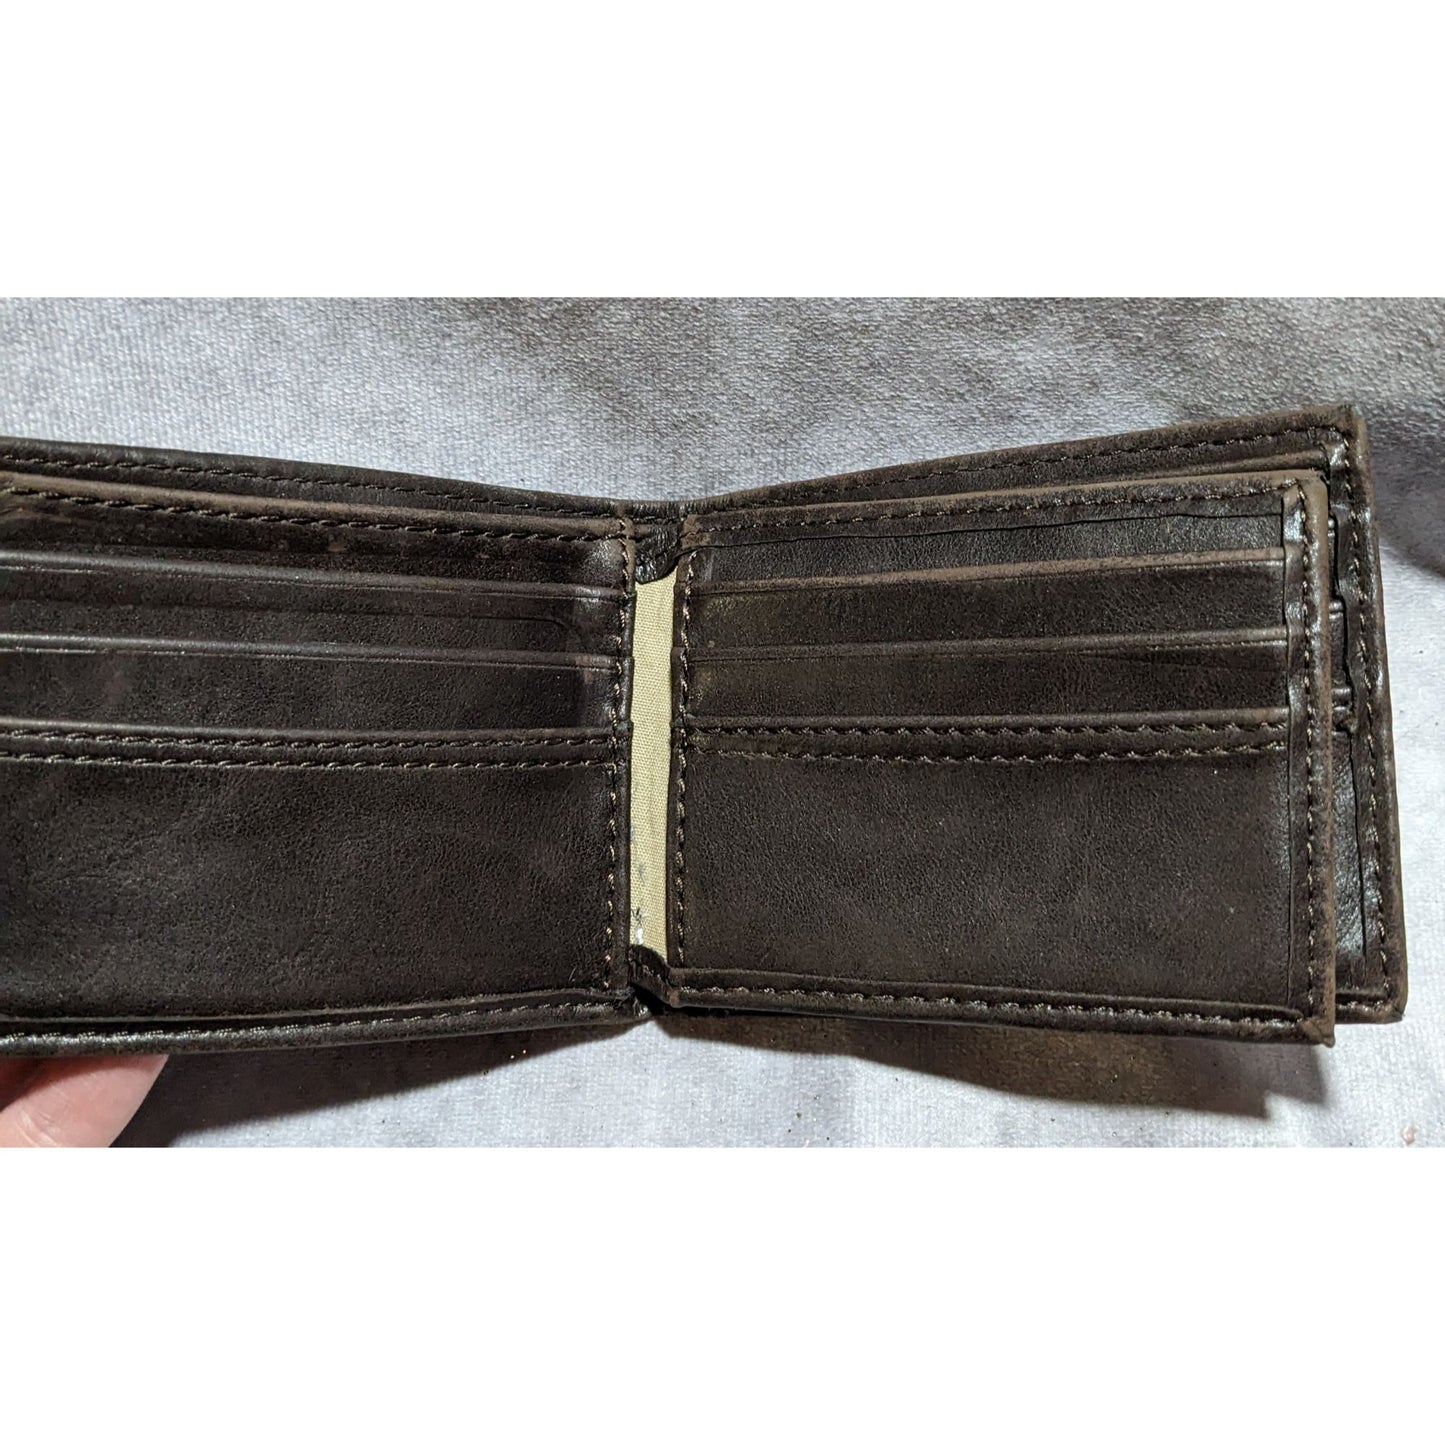 Dockers Brown Leather Wallet